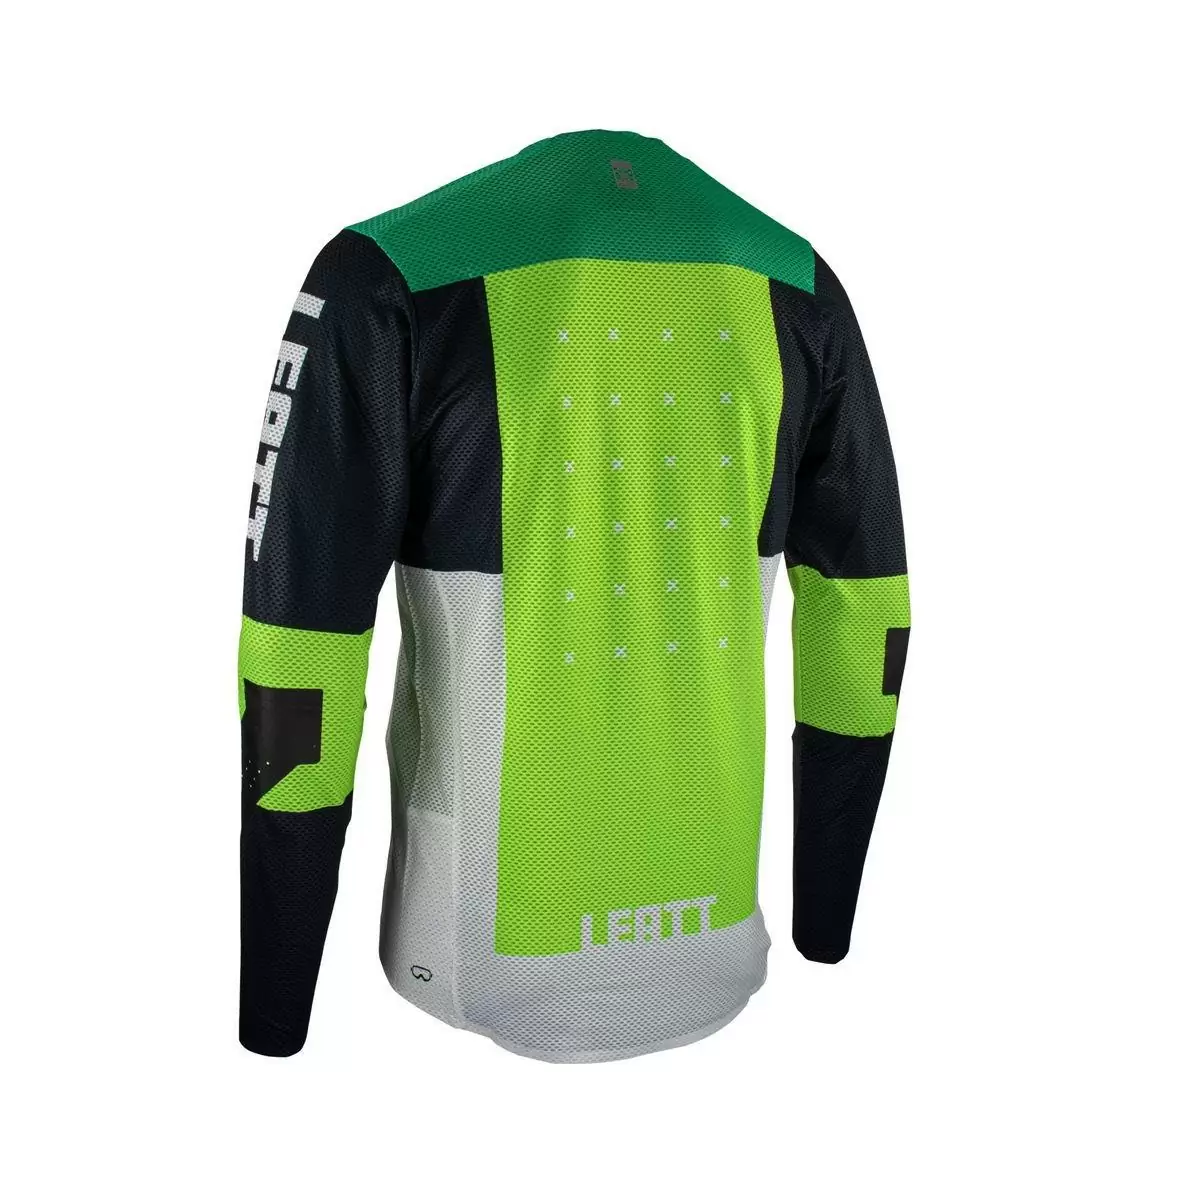 Gravity 4.0 mangas compridas MTB jersey verde/preto tamanho L #3